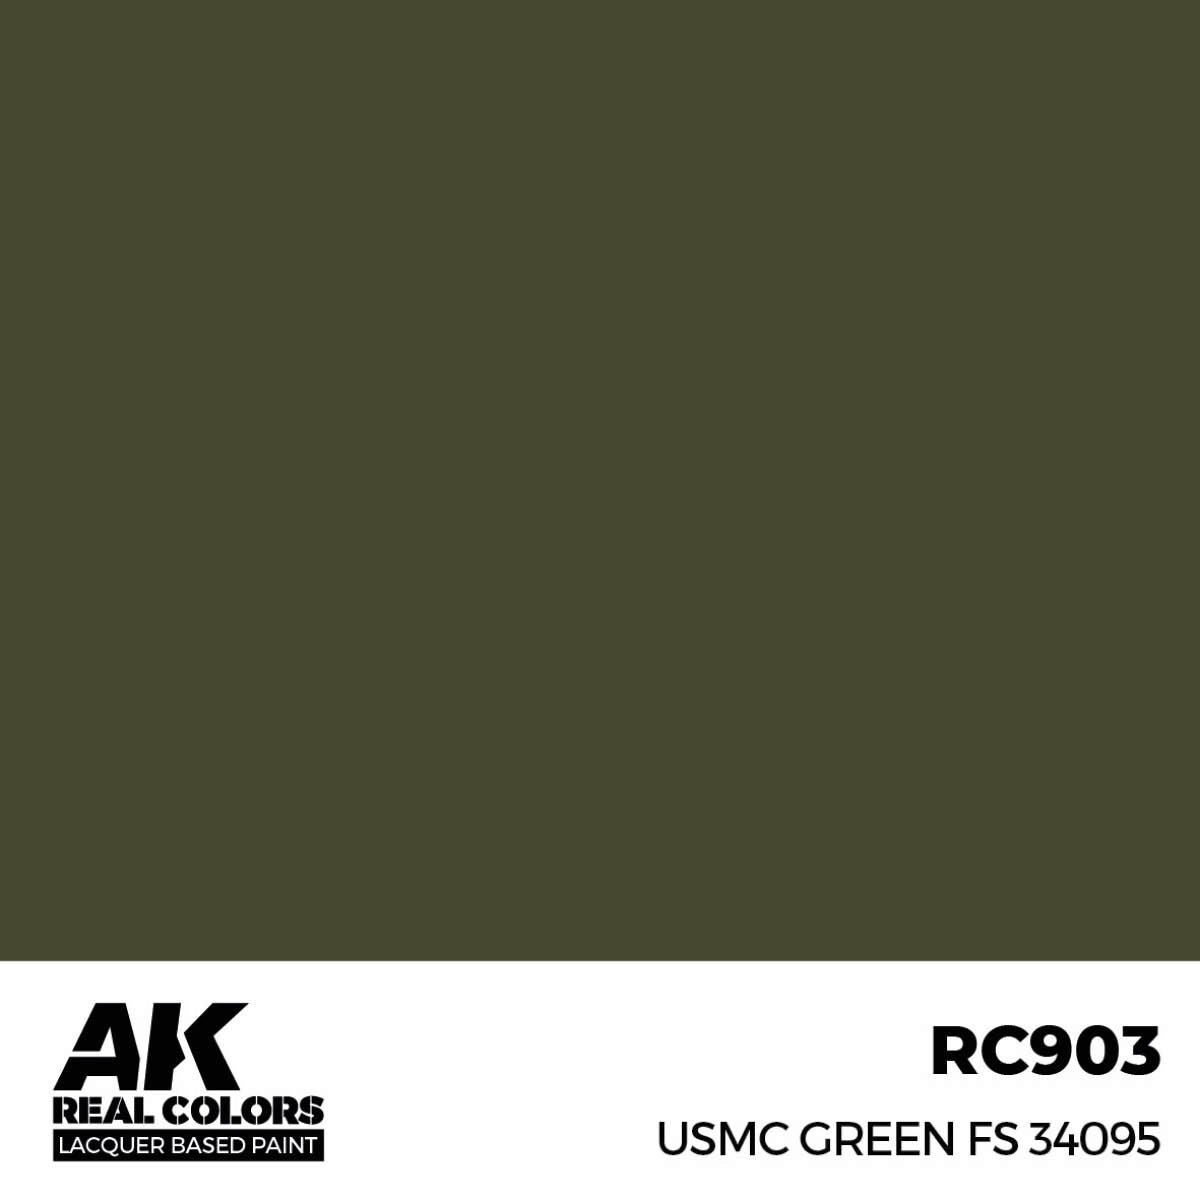 AK RC903 Real Colors USMC Green FS 34095 17 ml.